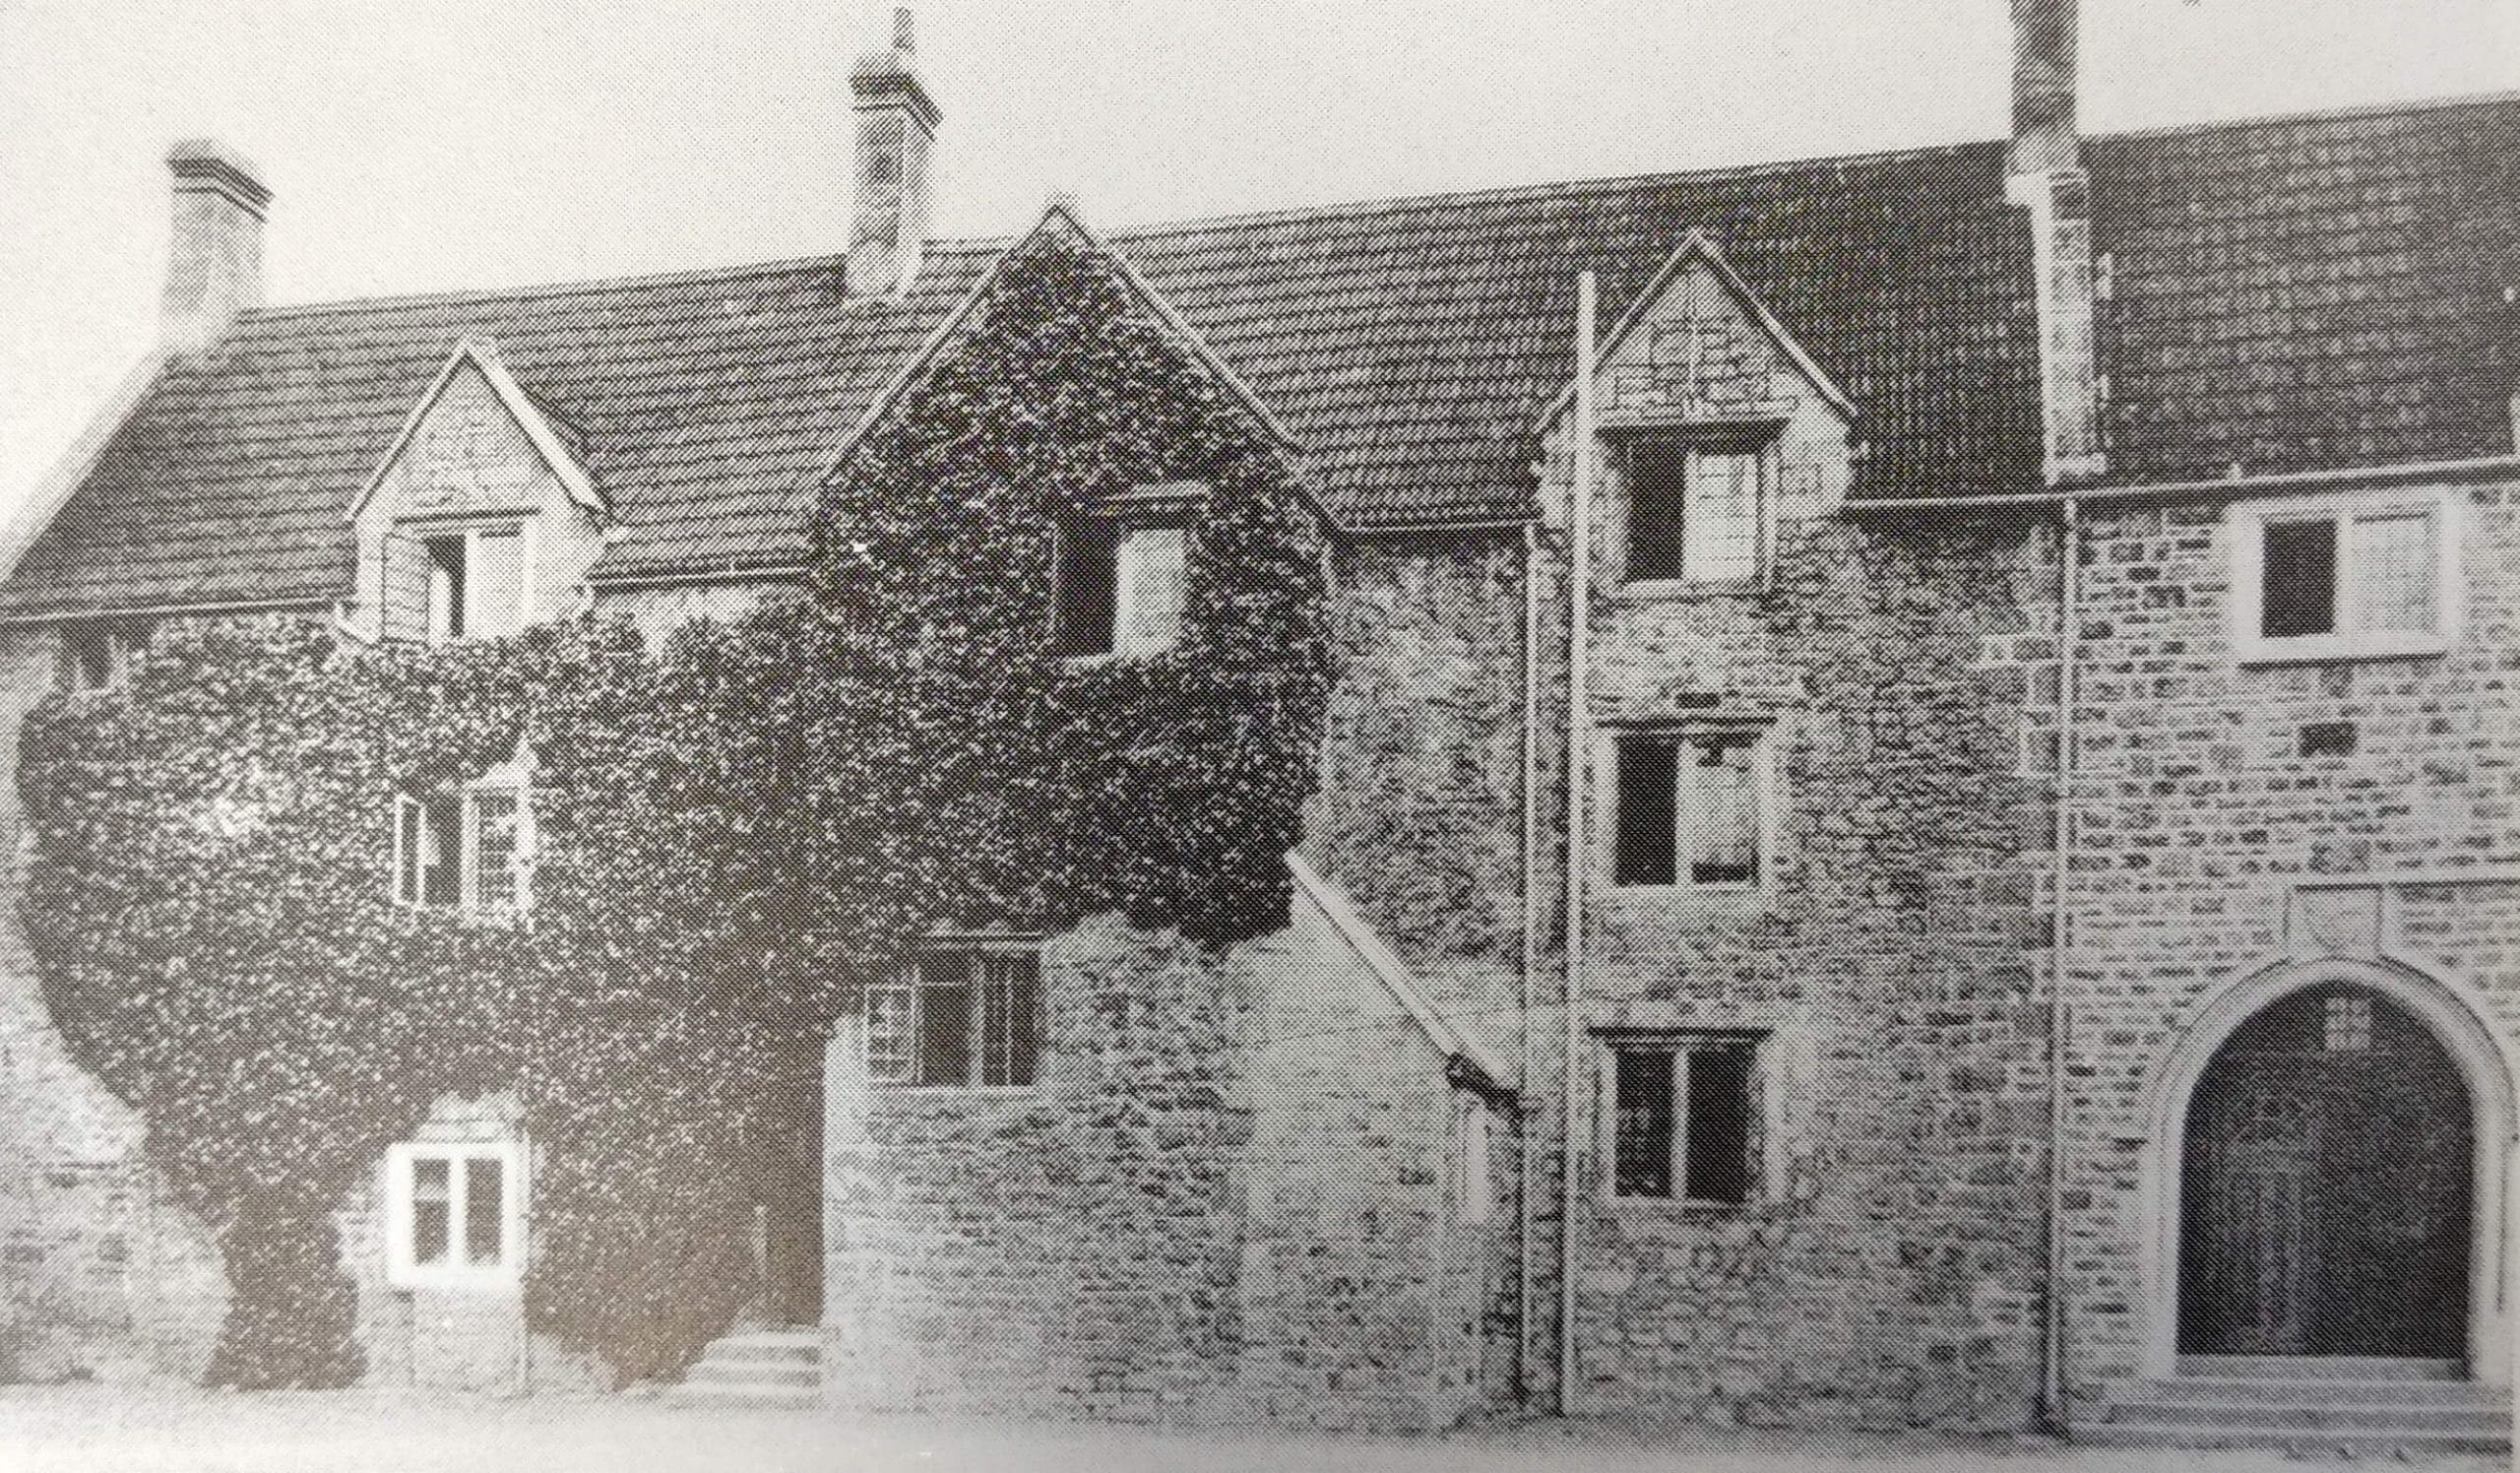 The farm, Monkton Combe school early 1900s